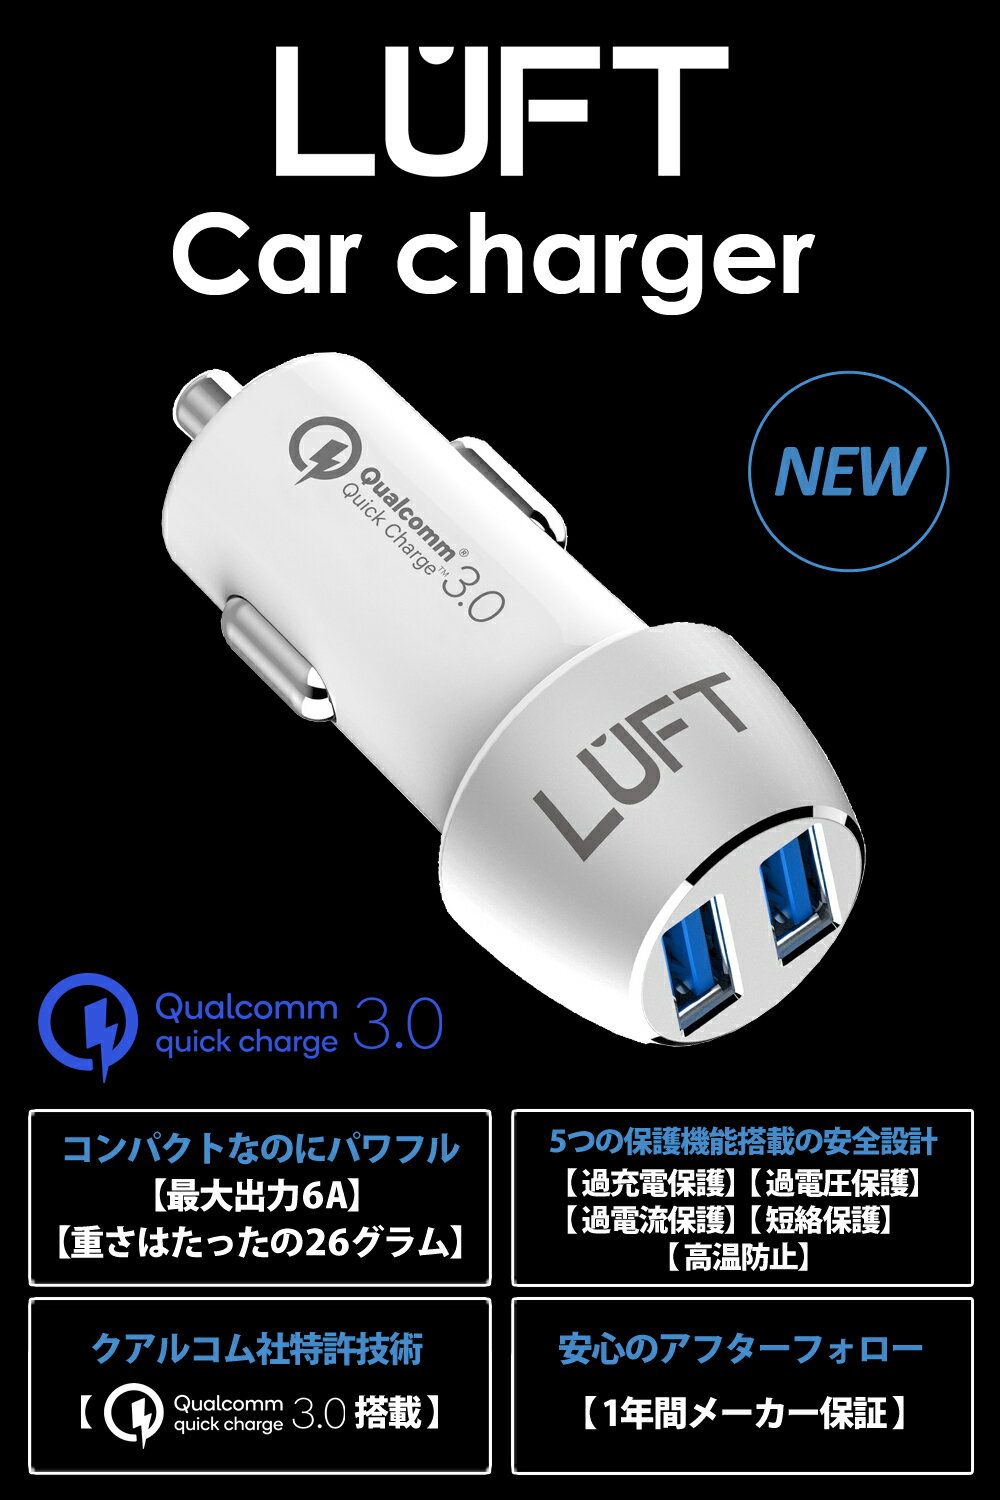 【Quick Charge3.0 搭載】カーチャージャー シガーソケット USB 急速充電 車載 車 充電器 最大出力6A スマホ スマートフォン タブレット 12V-24V対応 iphone Android アンドロイド アイフォン クイックチャージ クアルコム